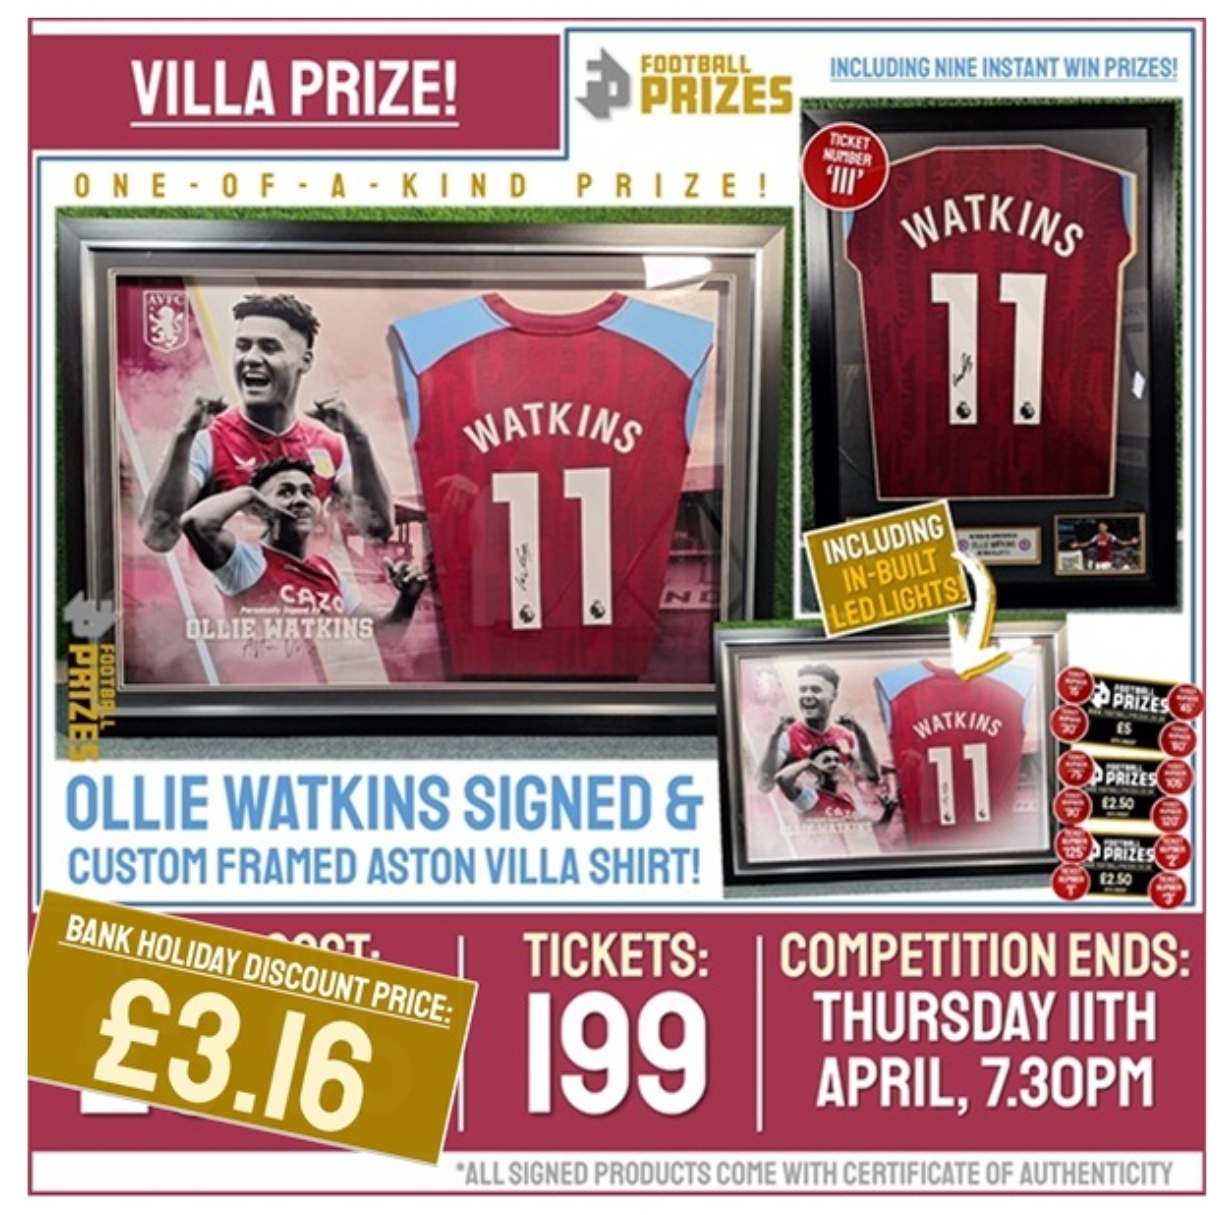 Aston Villa Competition! Ollie Watkins Signed & Custom LED Framed Aston Villa Shirt! (Plus THIRTEEN Instant Win Prizes!)